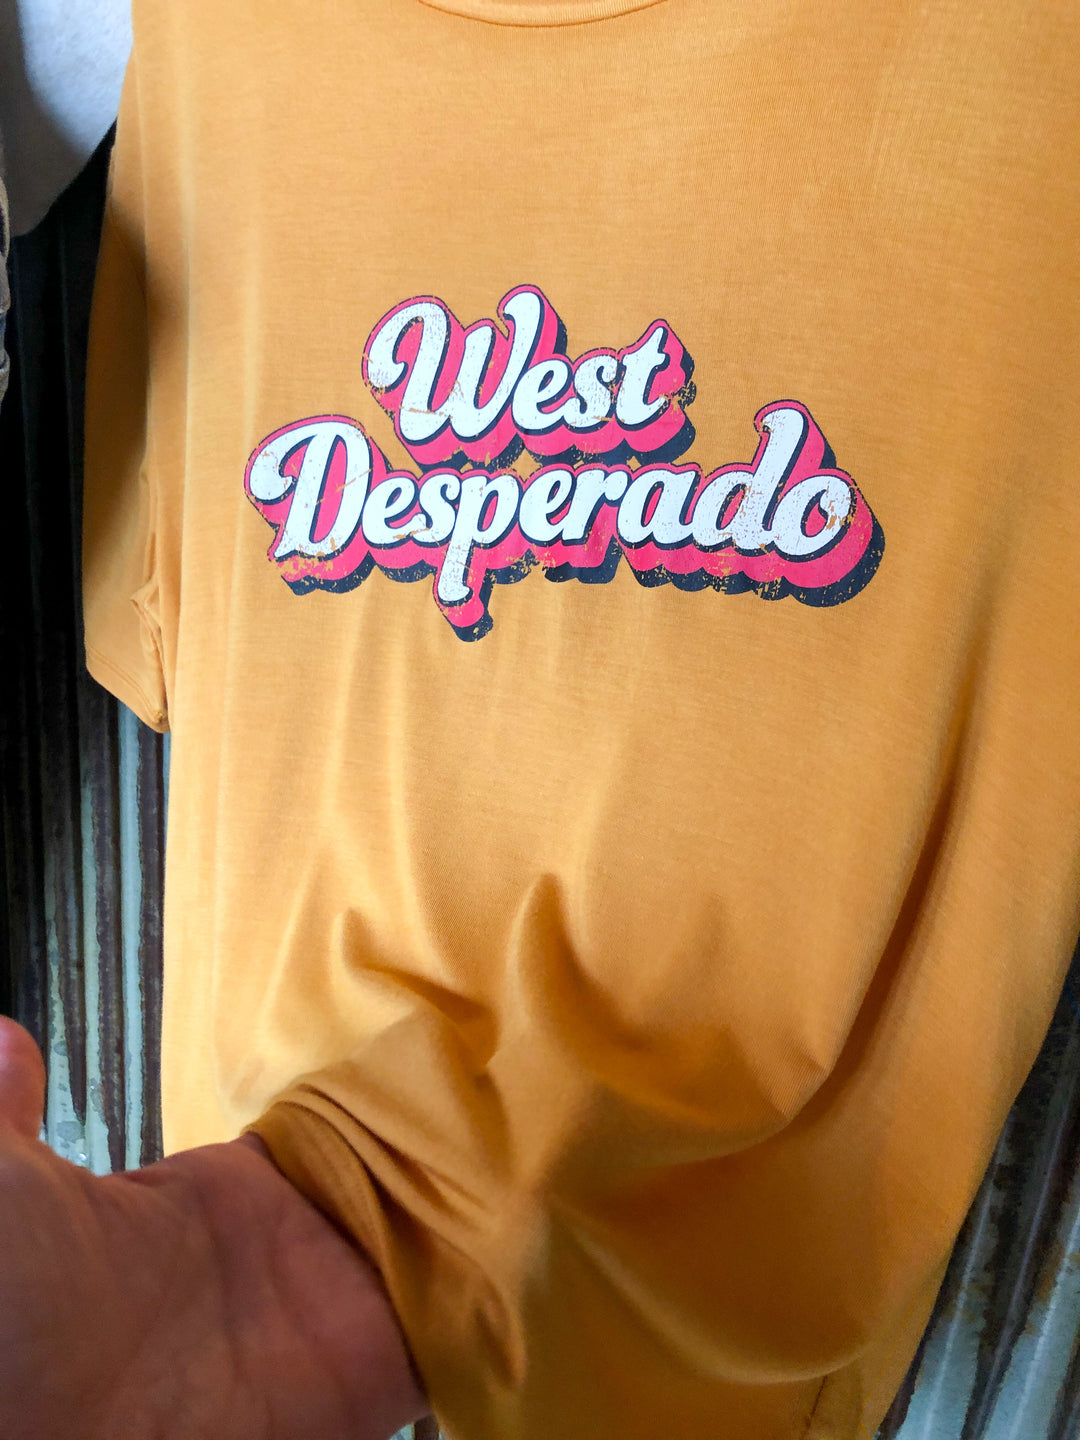 The West Desperado